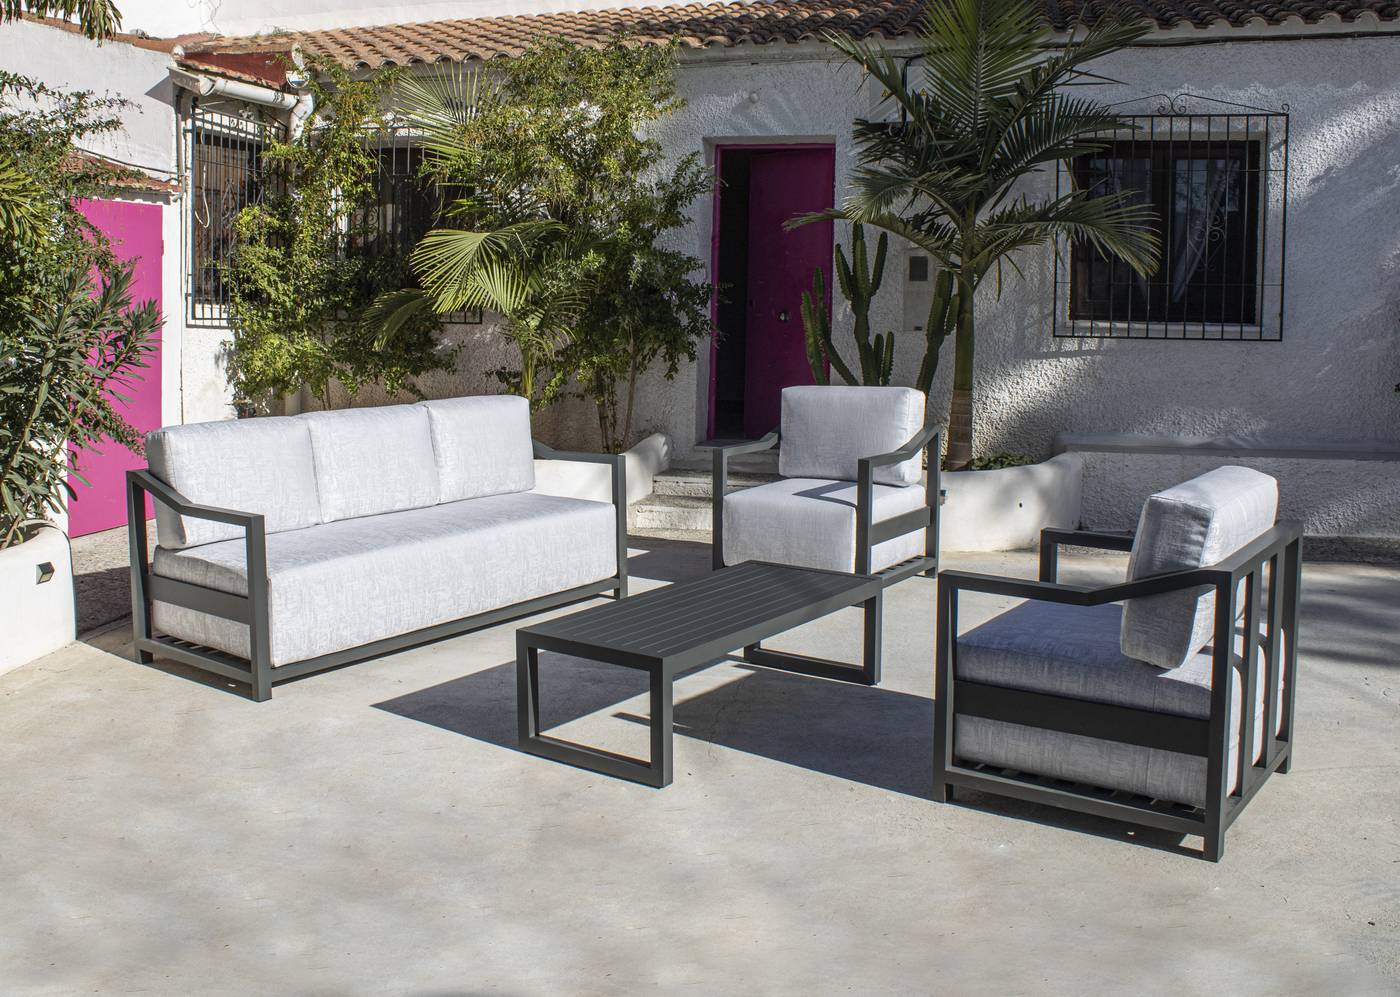 Conjunto aluminio con cojines extra extra confort: sofá de 3 plazas + 2 sillones + 1 mesa de centro. Colores: blanco, antracita, marrón, champagne o plata.